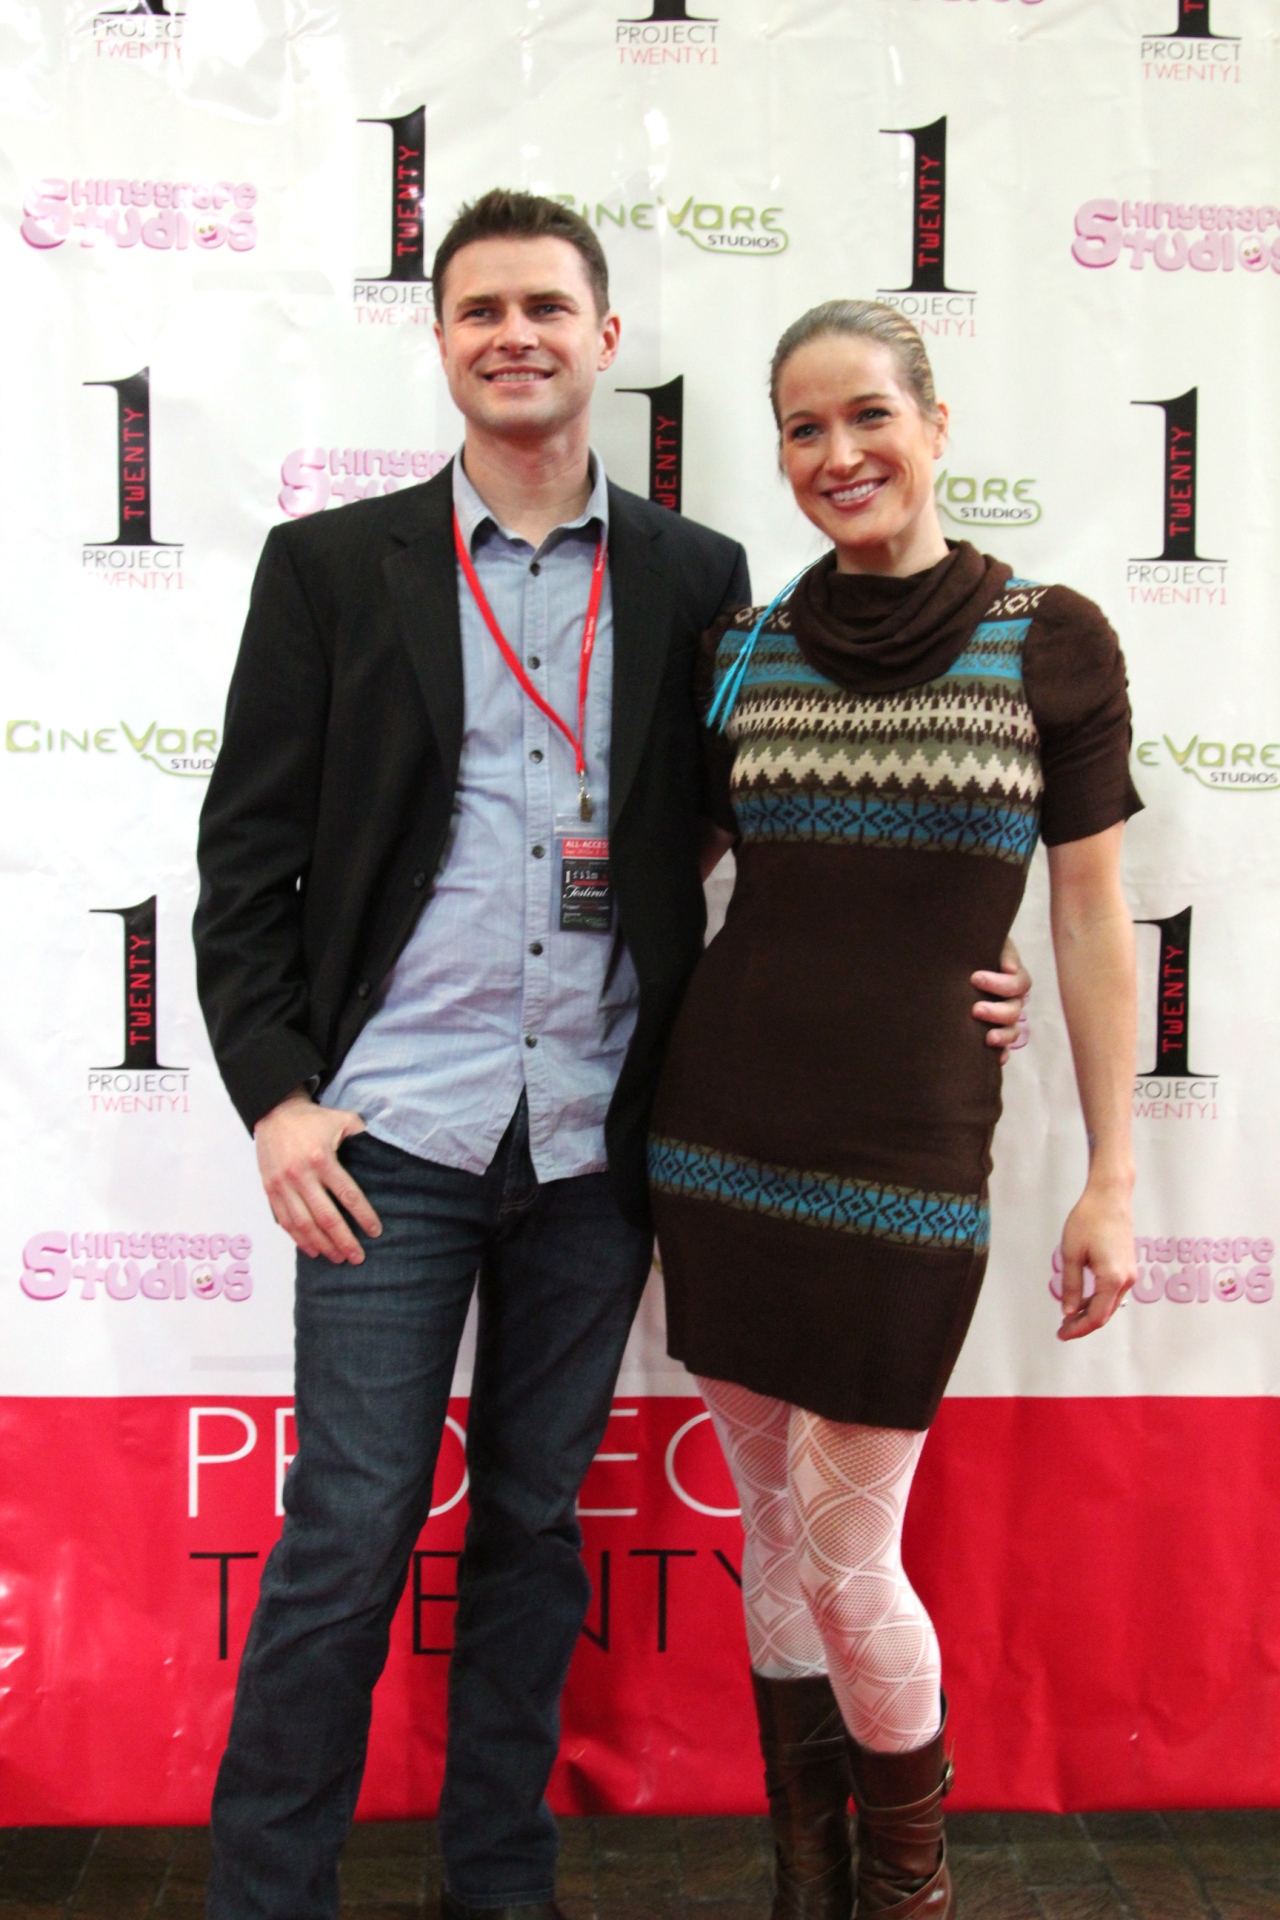 Mark Kochanowicz with Carrie Leigh Snodgrass at the 2011 Philadelphia Film & Animation Festival.